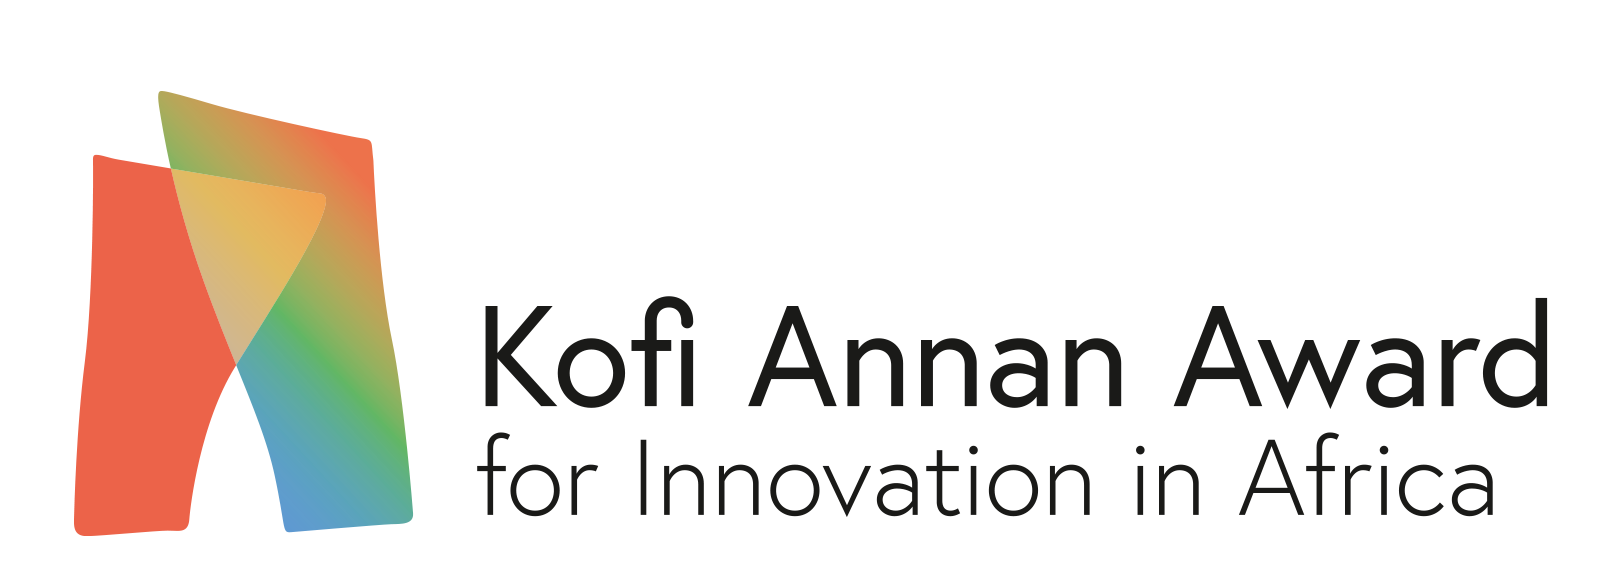 Kofi Annan Award for Innovation in Africa